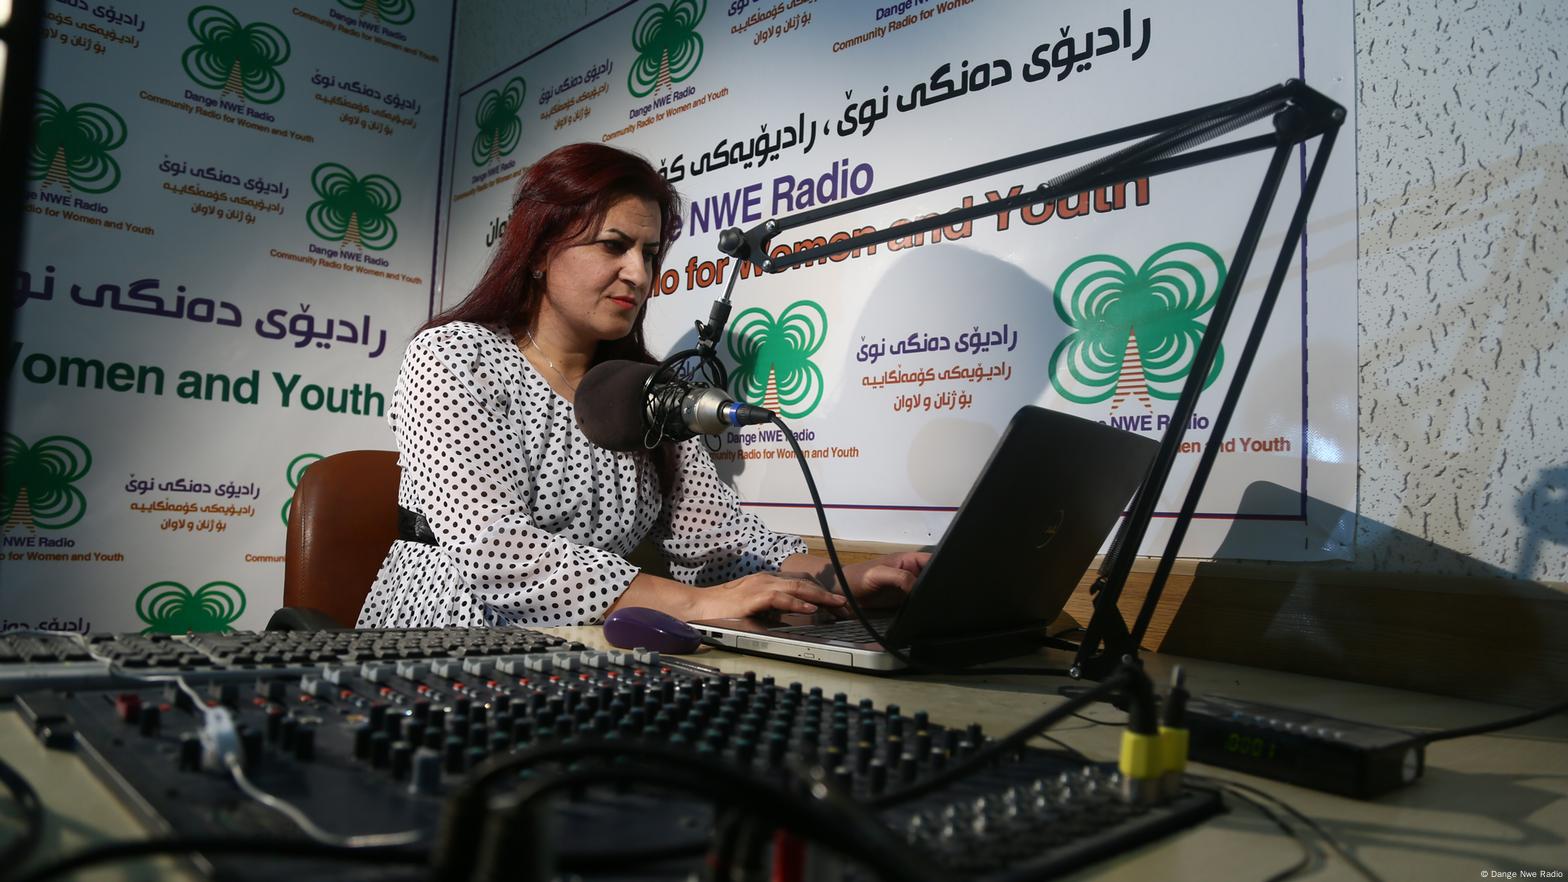 Irak Rangeen Mahmood von Dange Nwe Radio